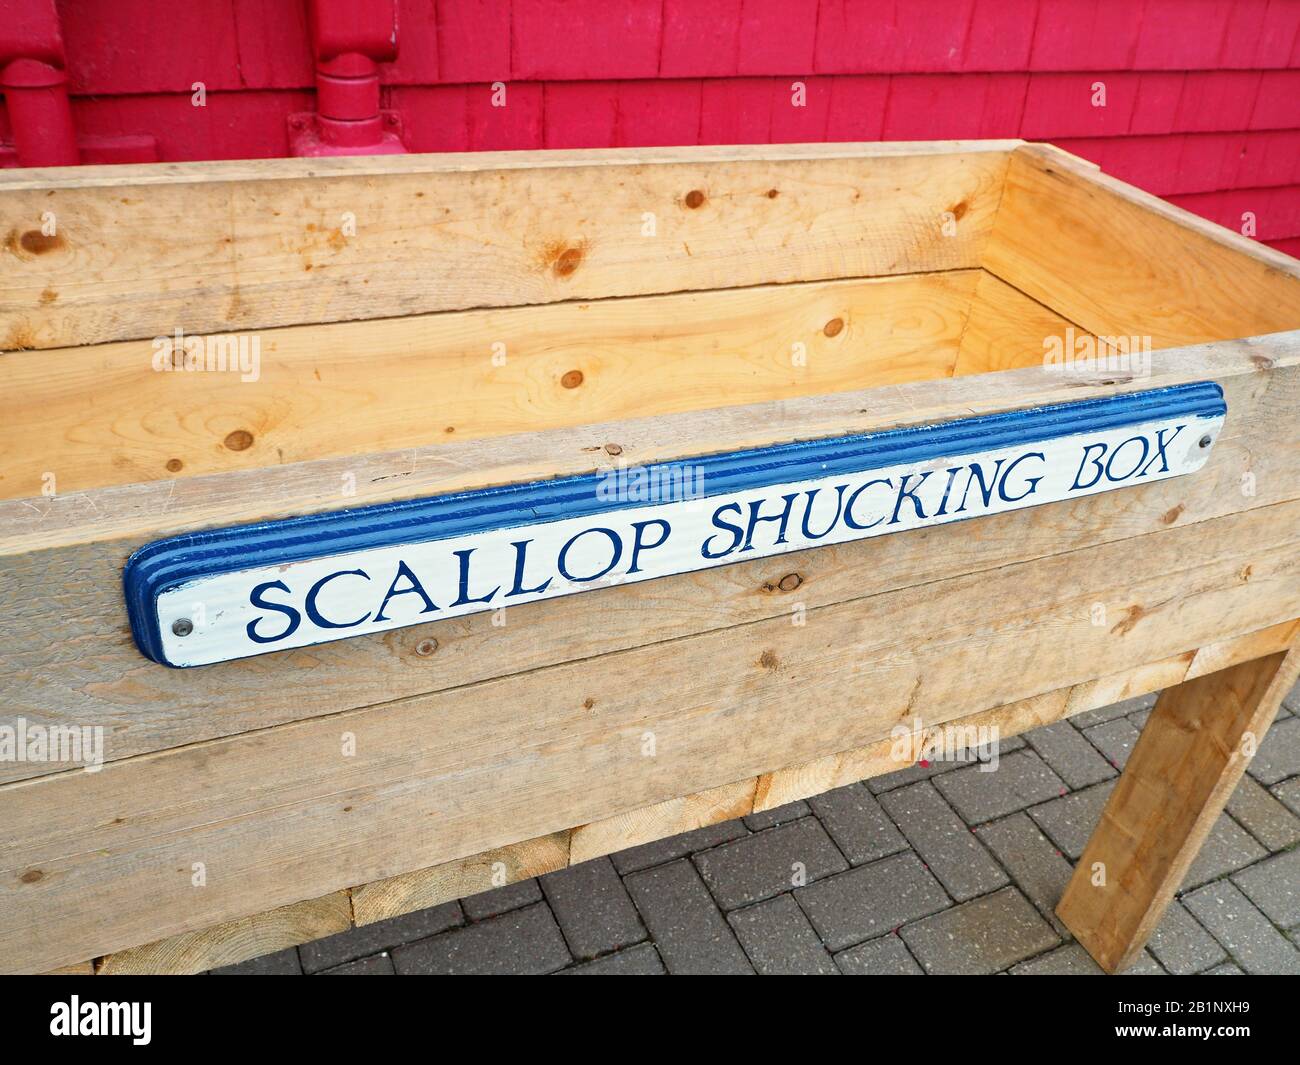 Scallop shucking box, Lunenburg, Nova Scotia, Canada Stock Photo